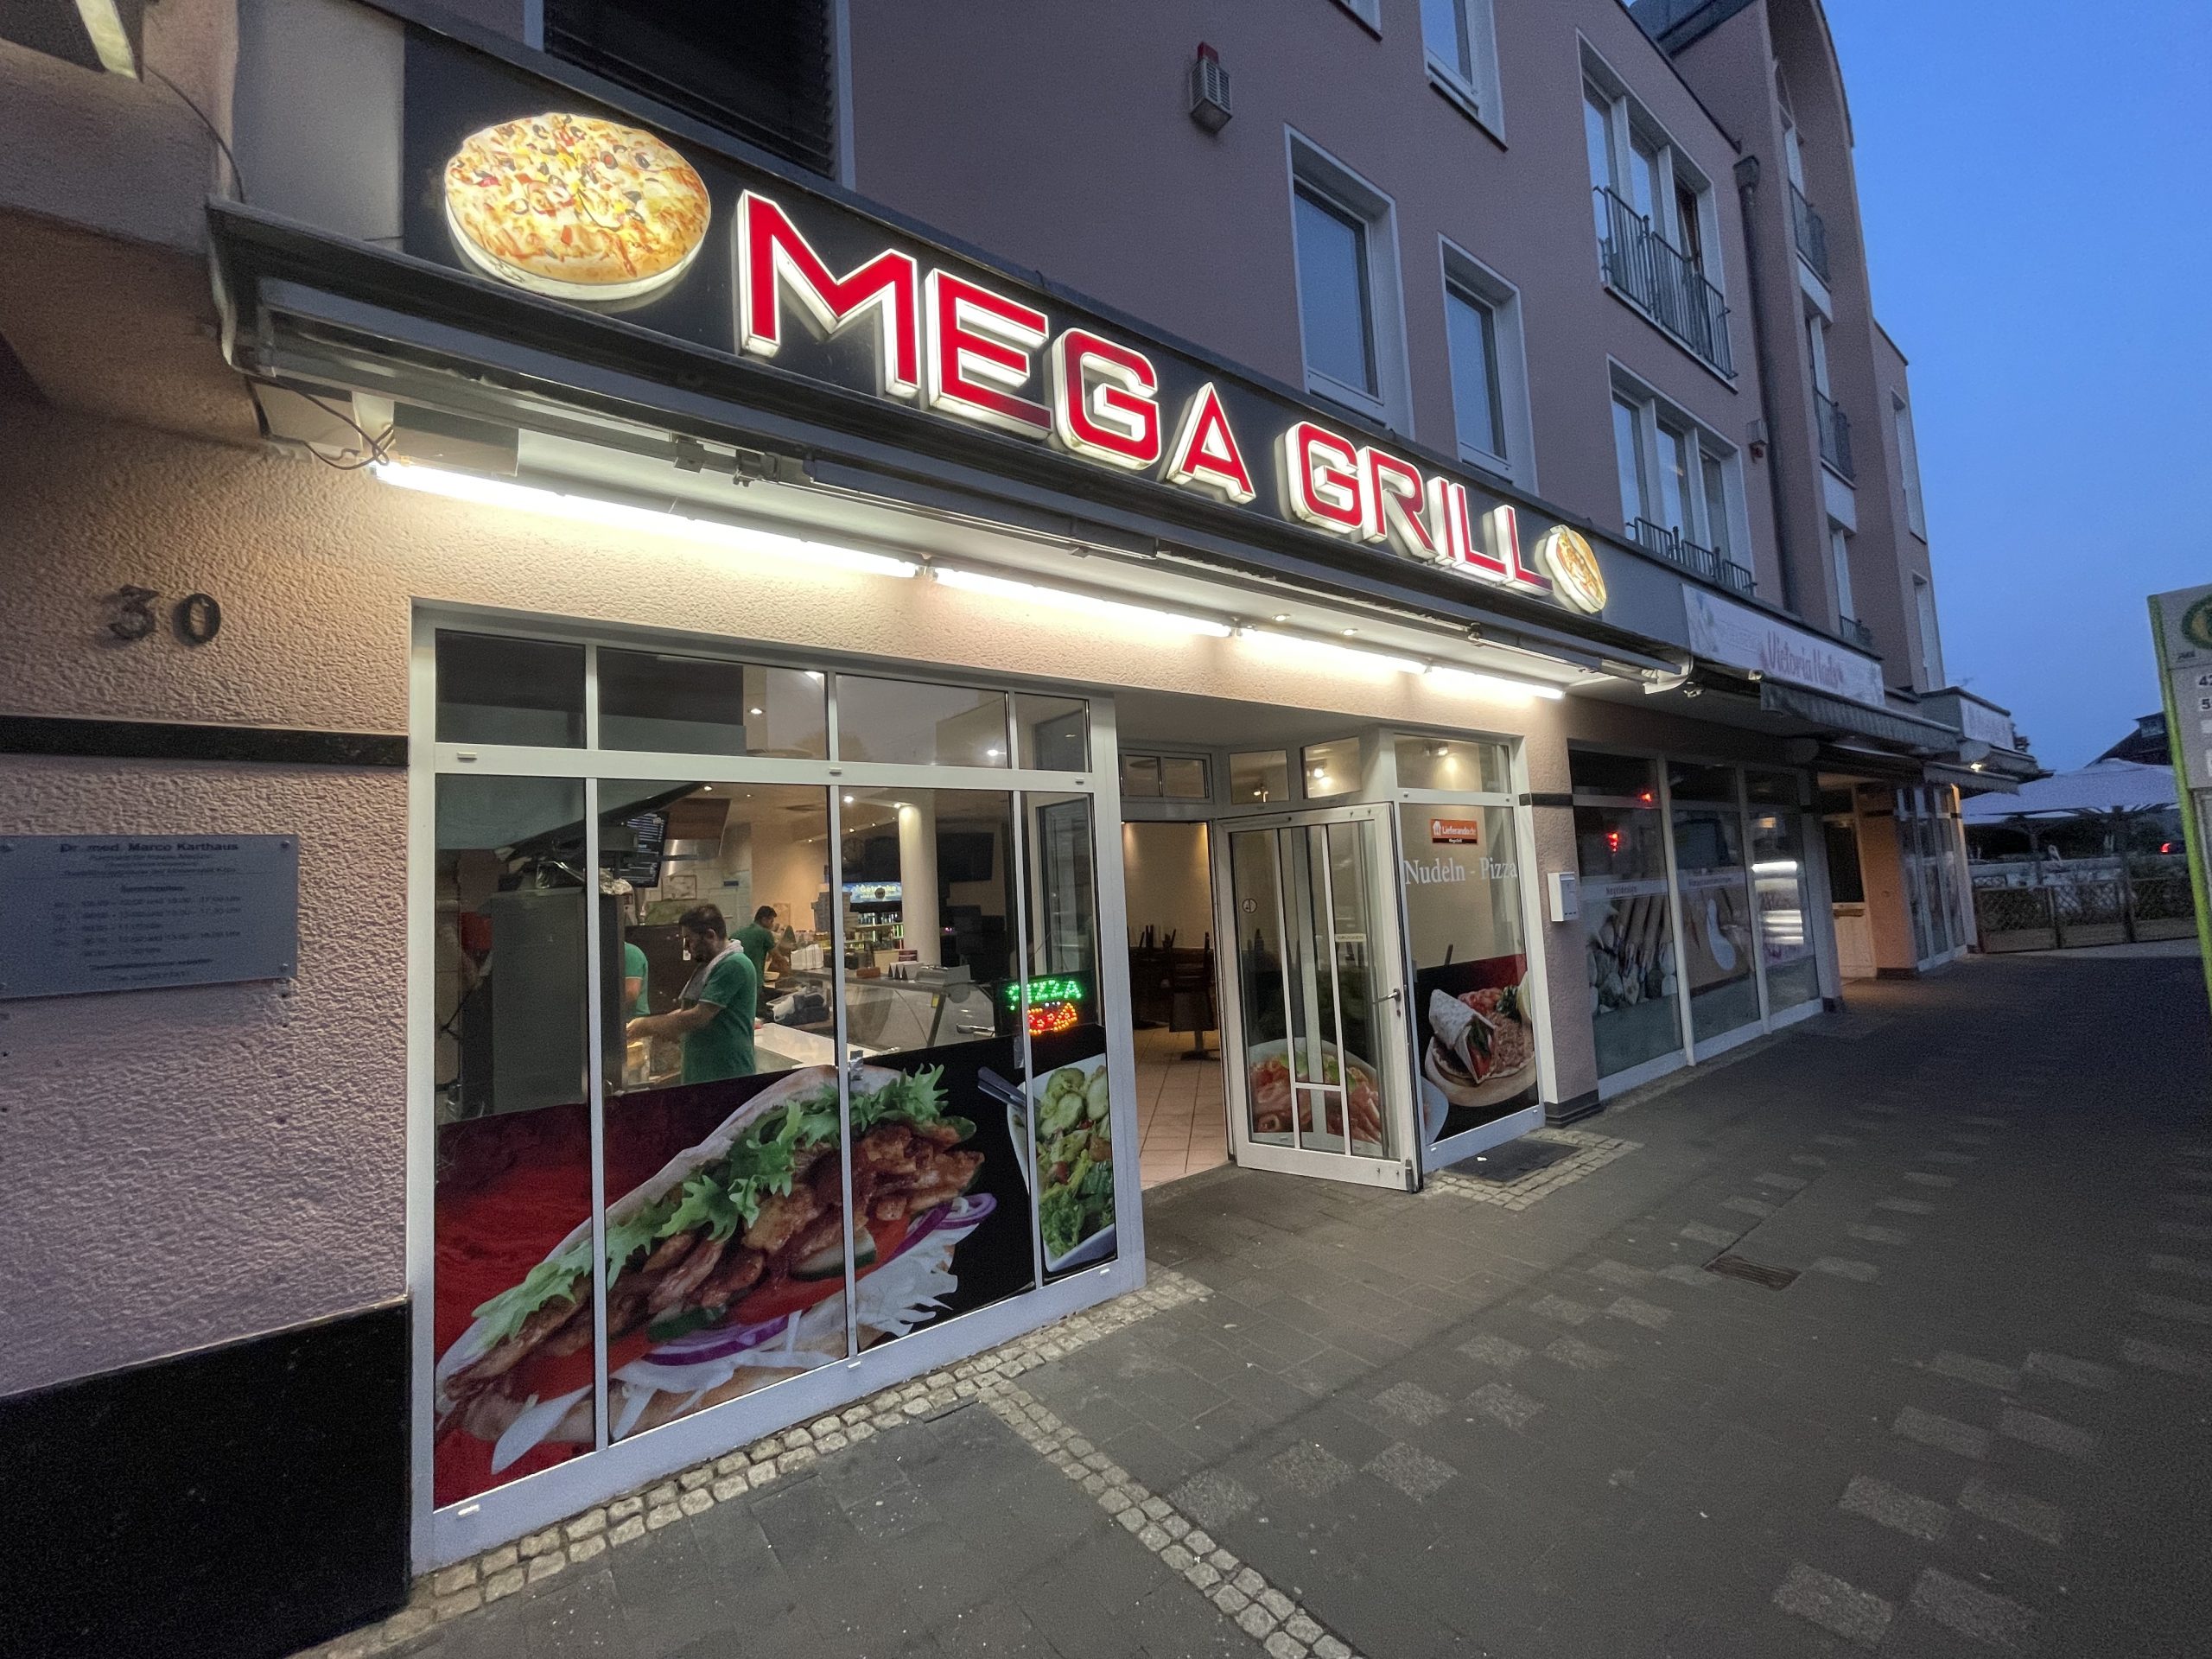 Mega Grill Außen